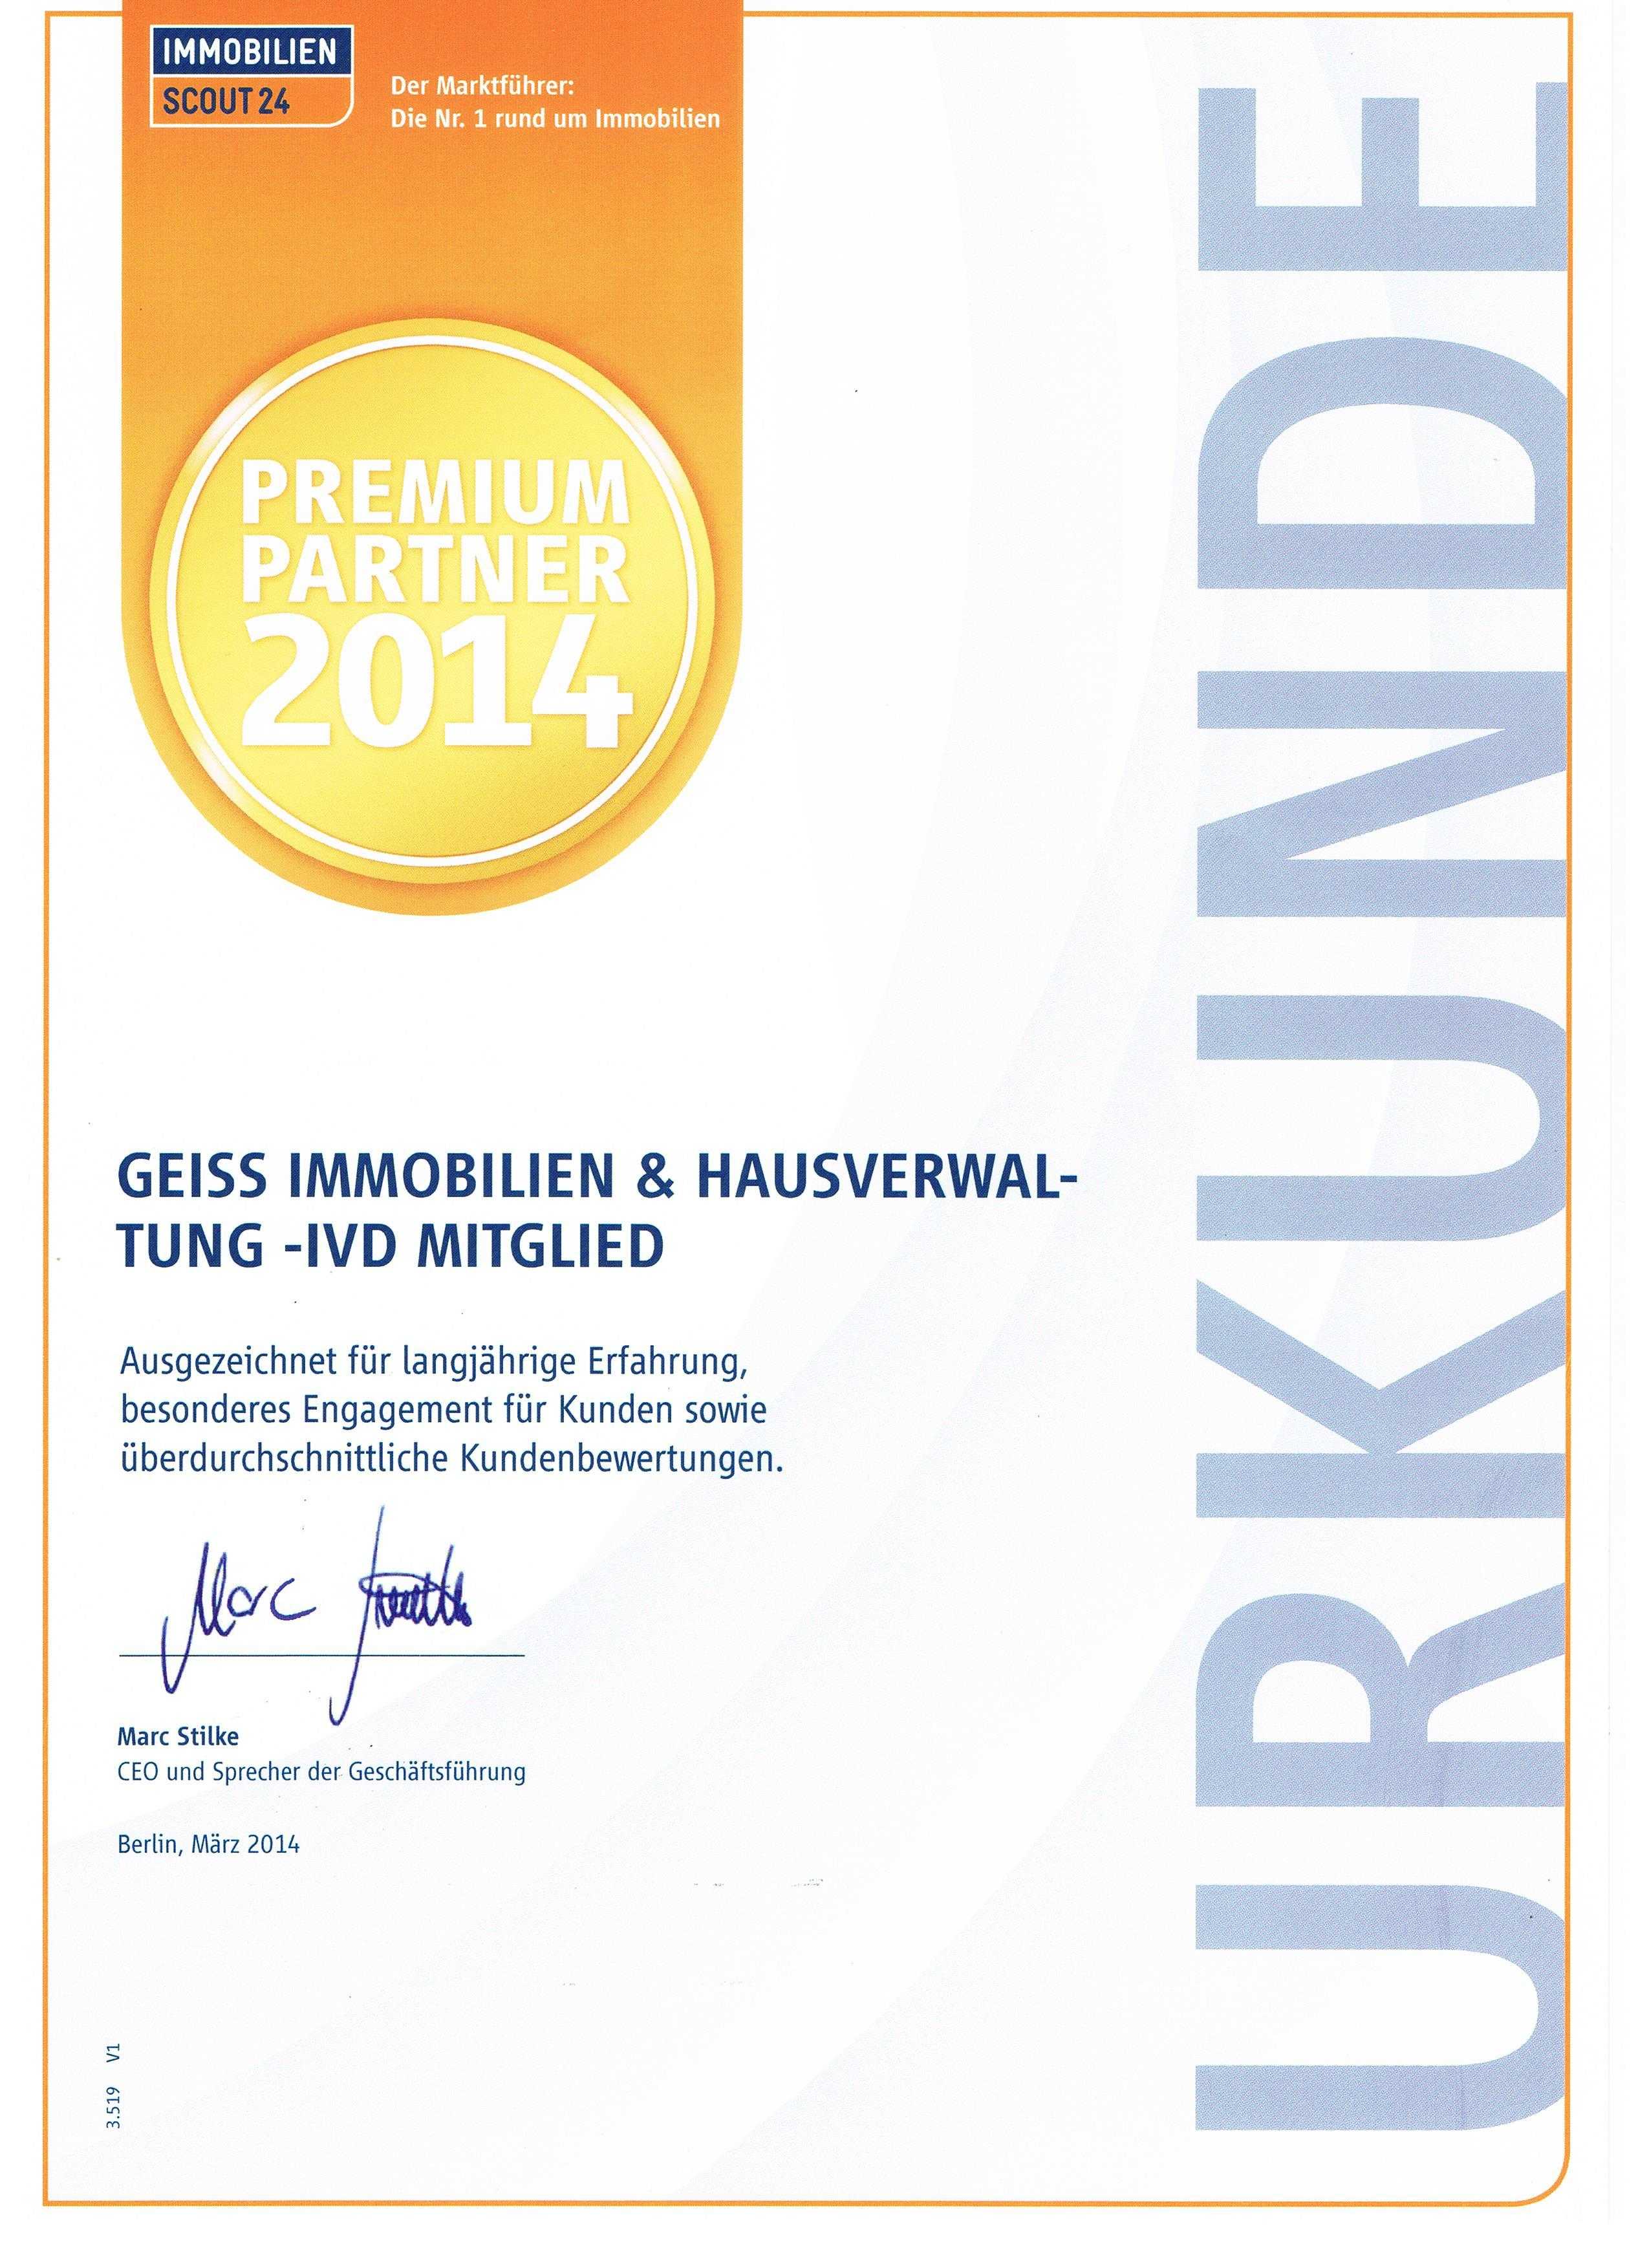 ImmobilienScout - Premium Partner 2014